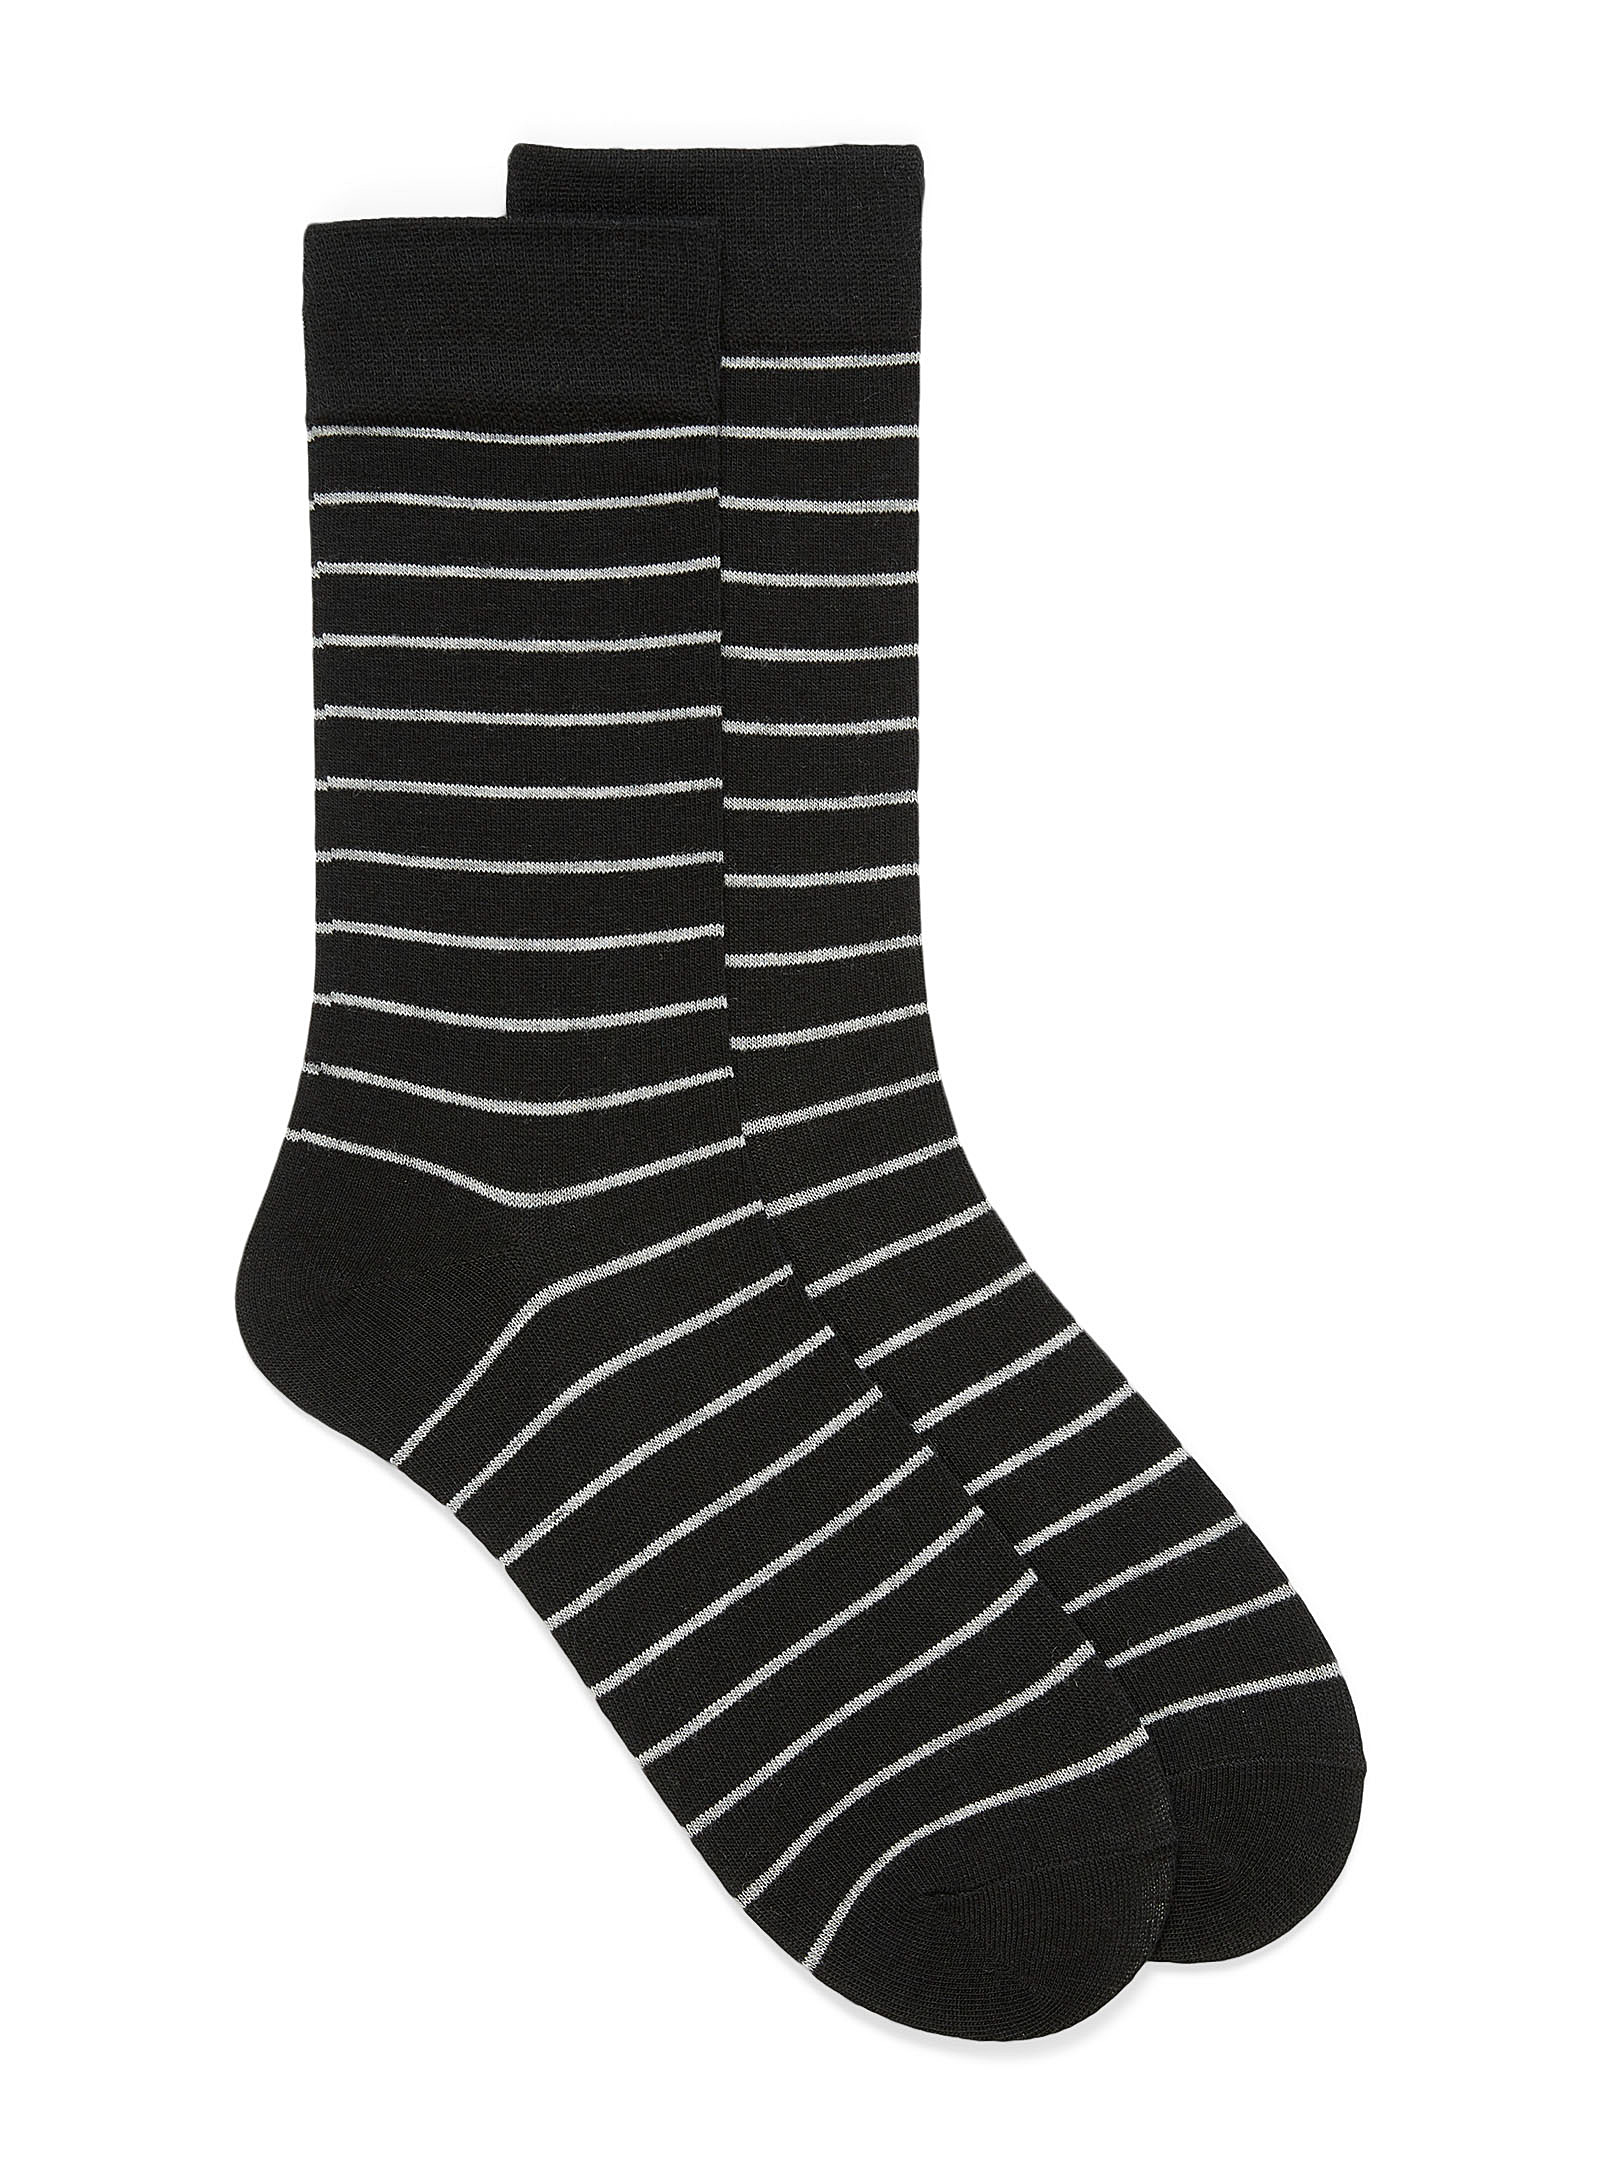 Le 31 - Men's Merino wool stripe socks